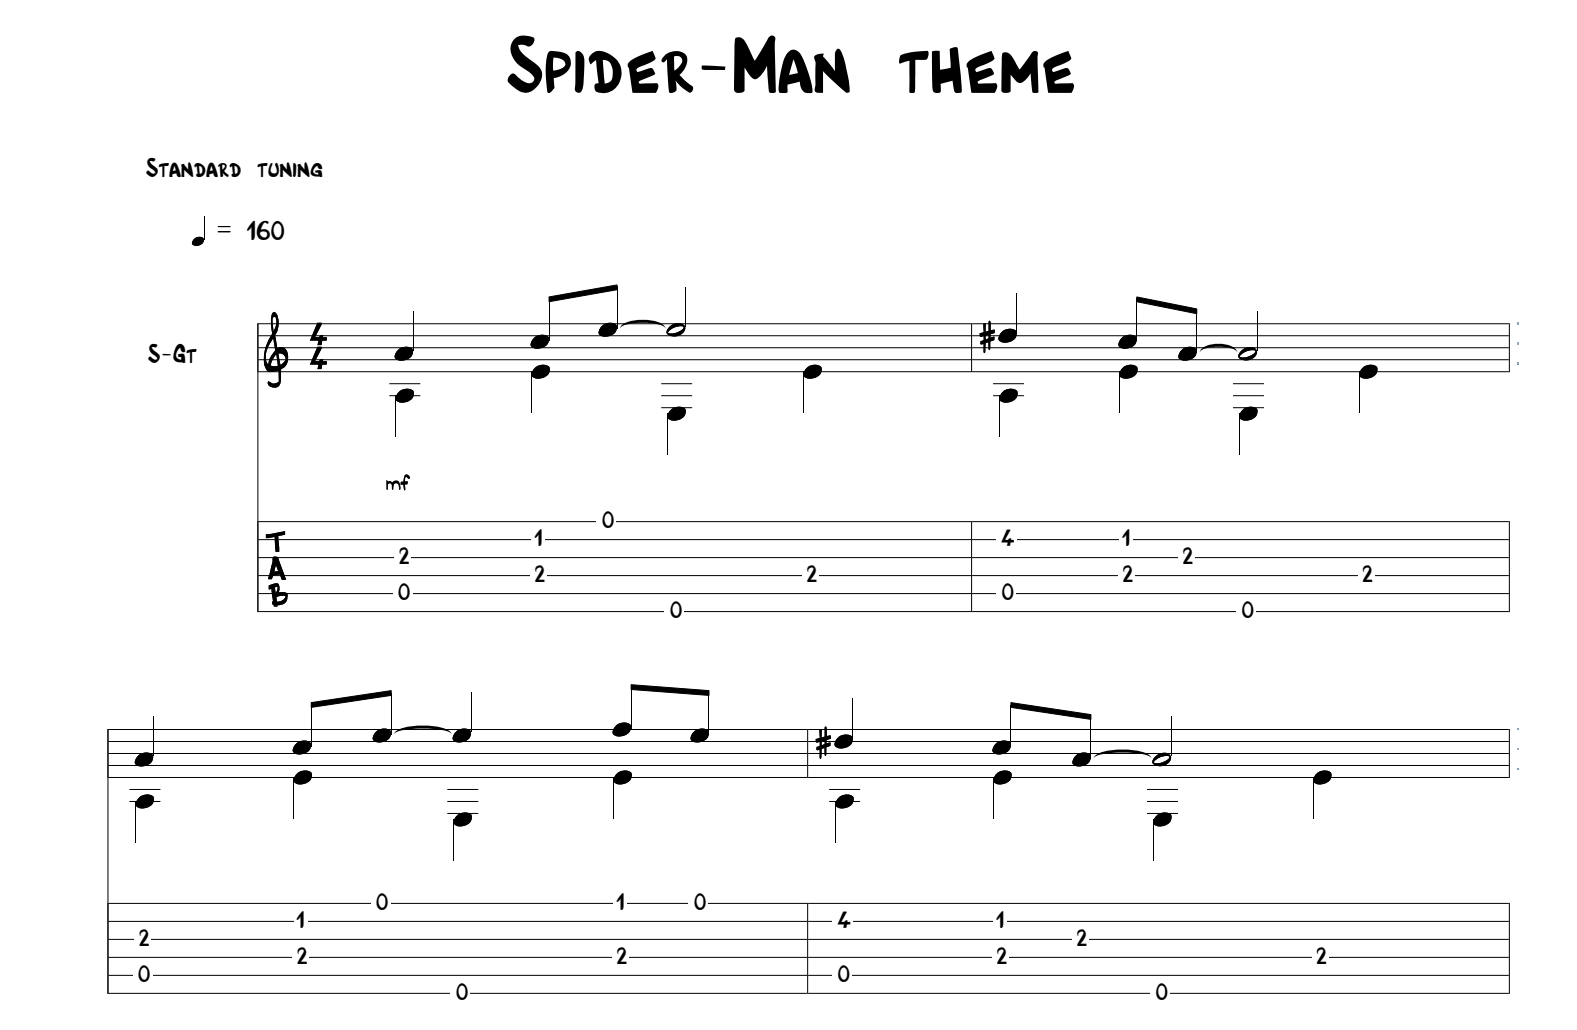 Theme From Spider-Man Sheet Music | Aerosmith | Guitar Tab